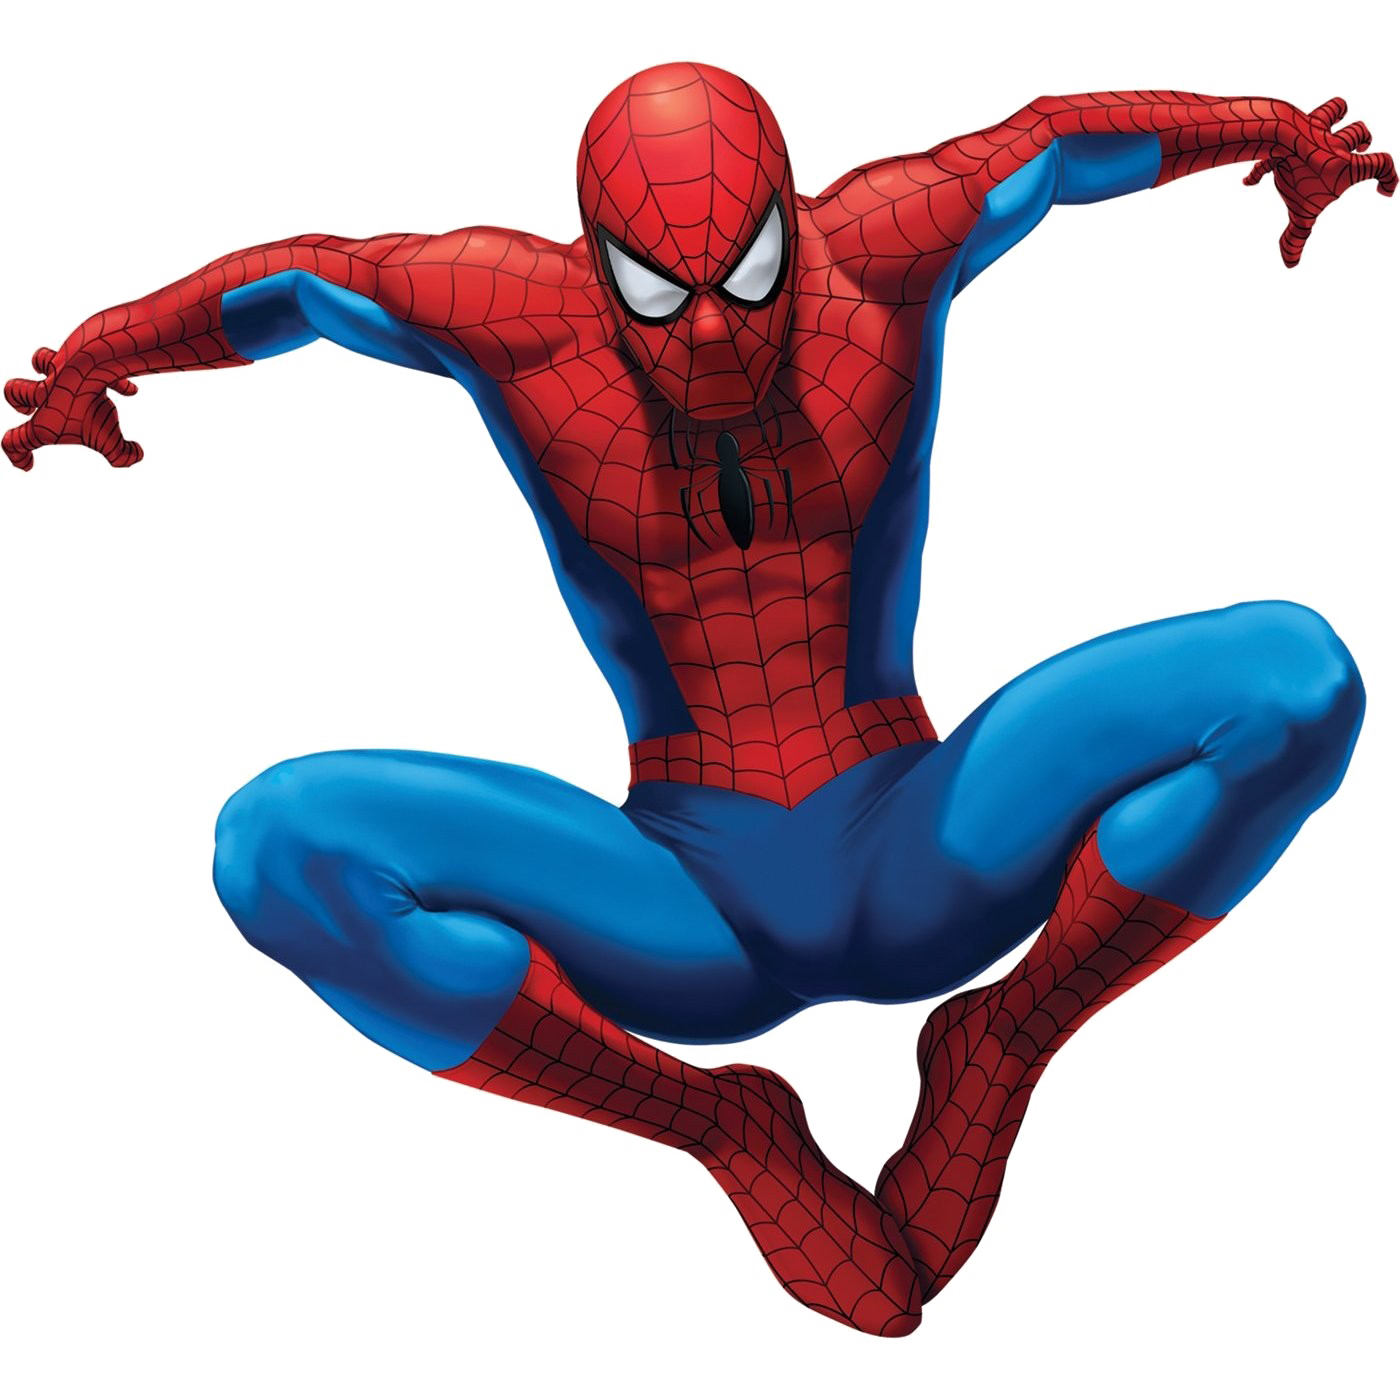 Spider-Man PNG Image Background | PNG Arts